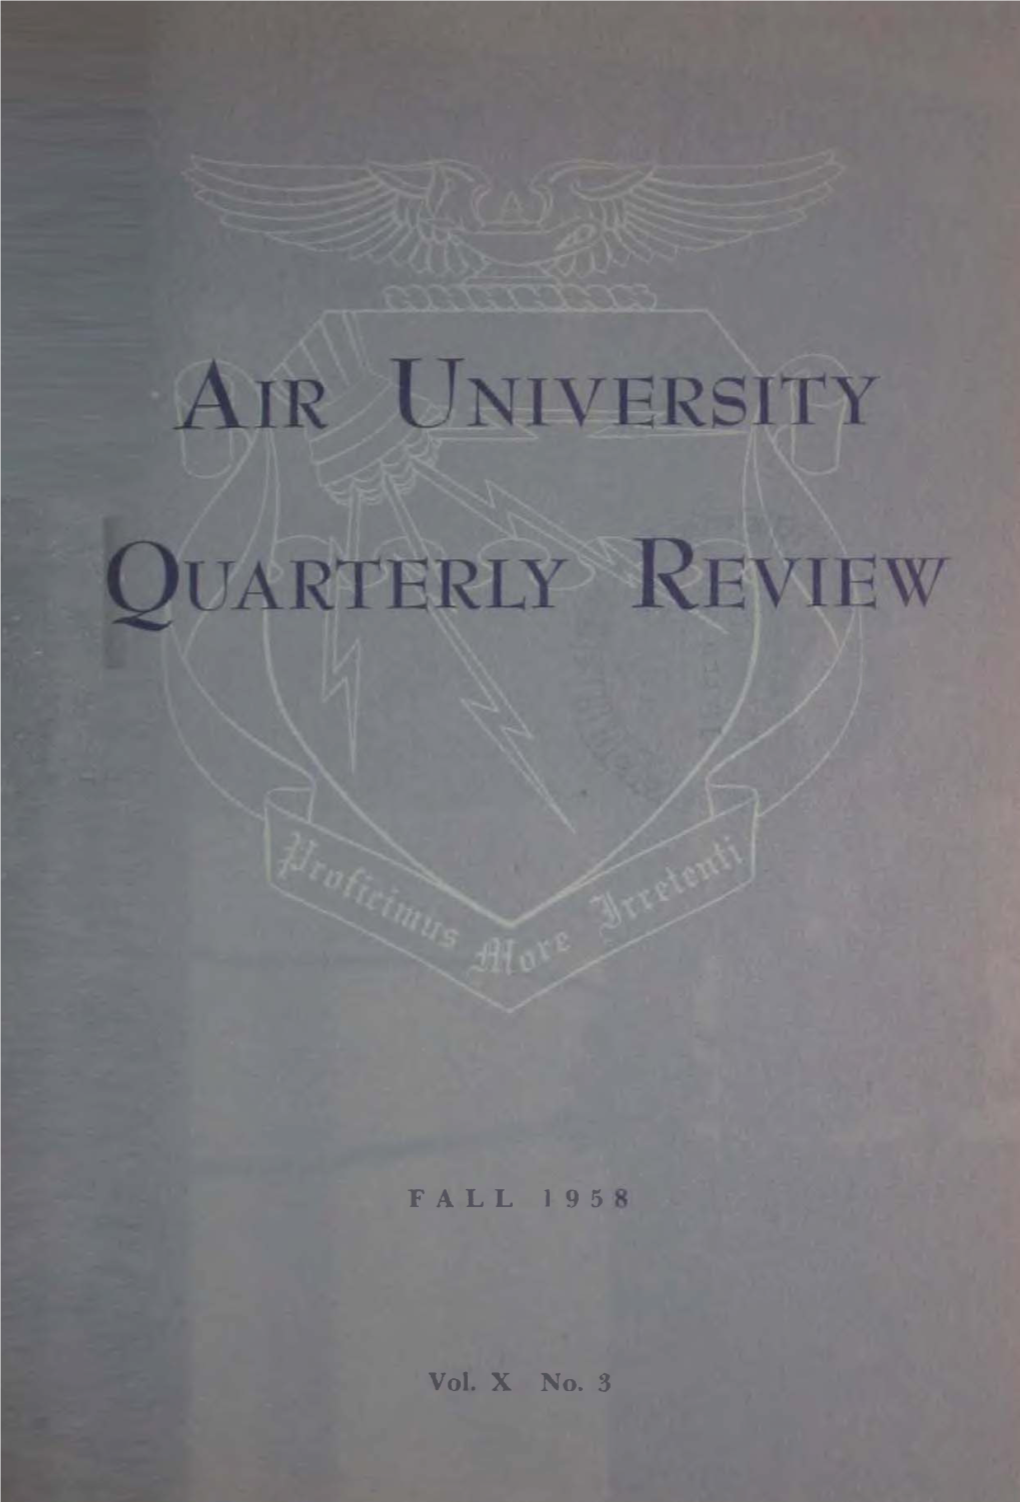 Air University Quarterly Review: Fall 1958, Volume X, No. 3